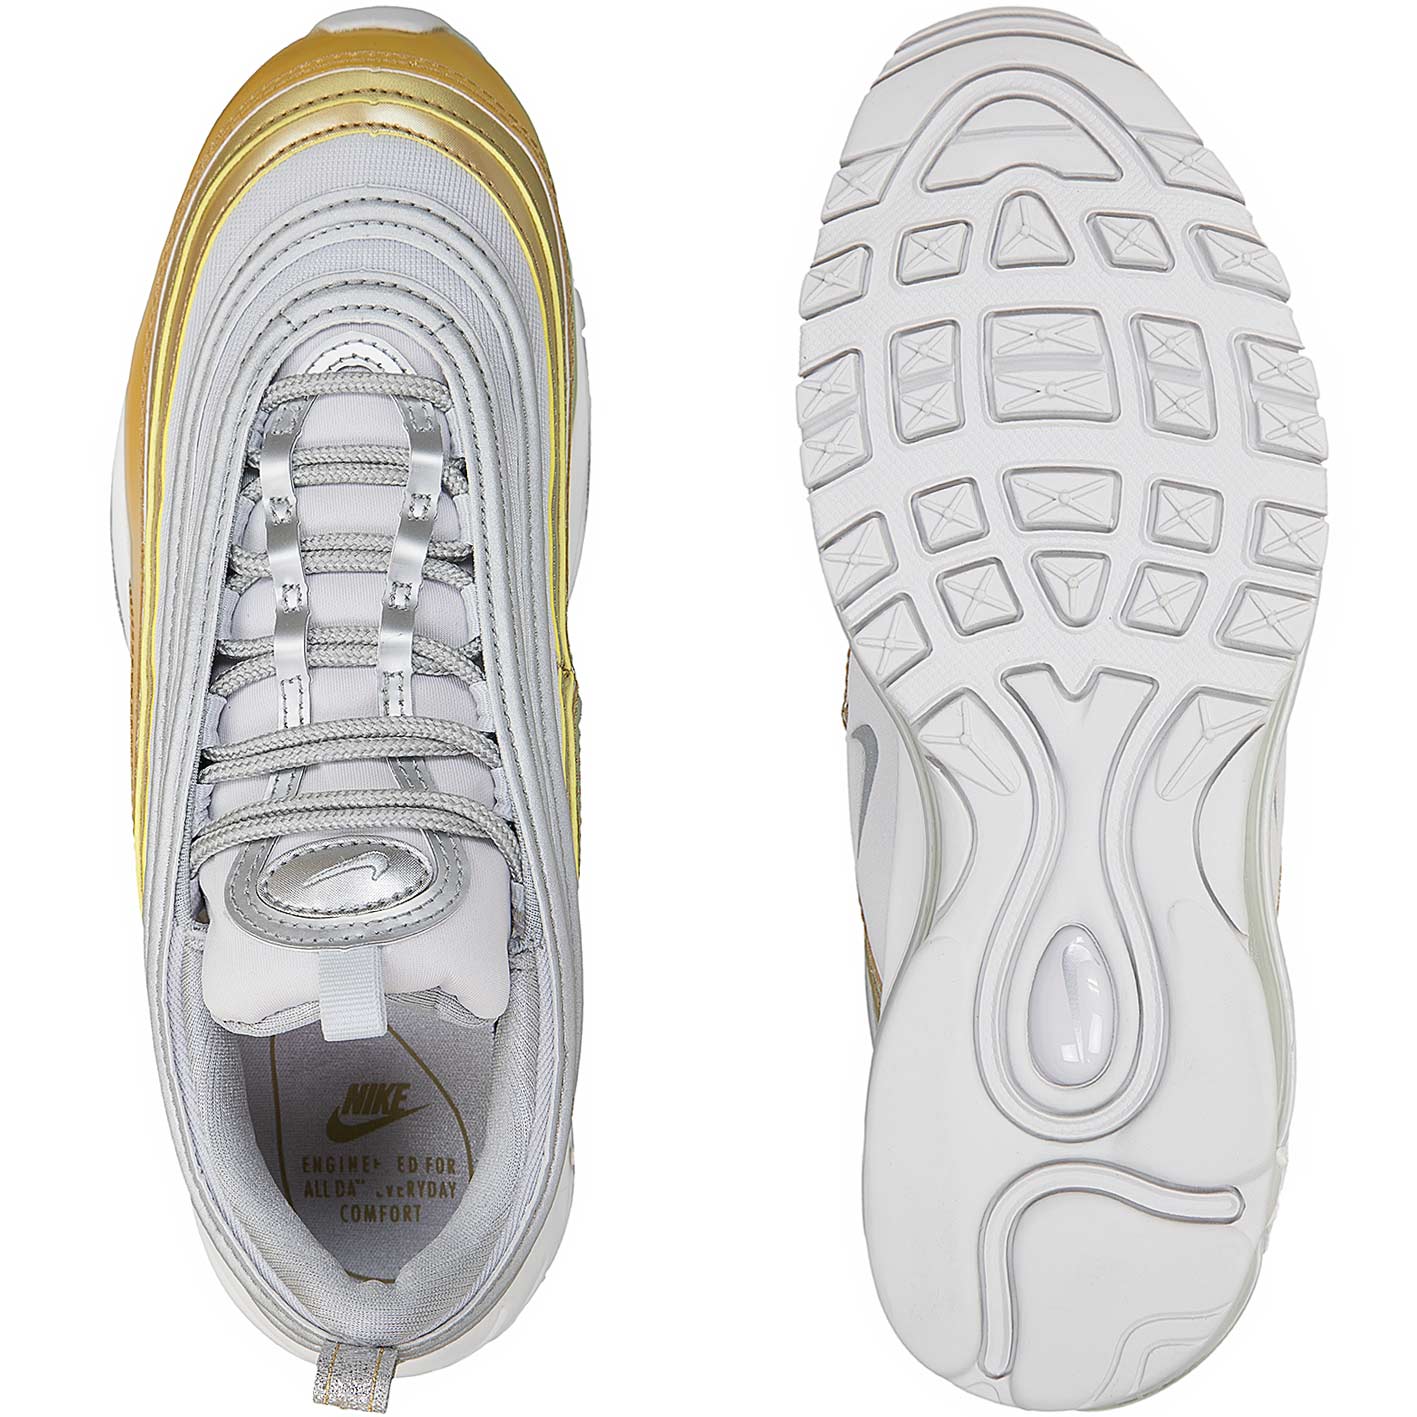 ☆ Nike Damen Sneaker Air Max 97 SE grau/silber - hier bestellen!